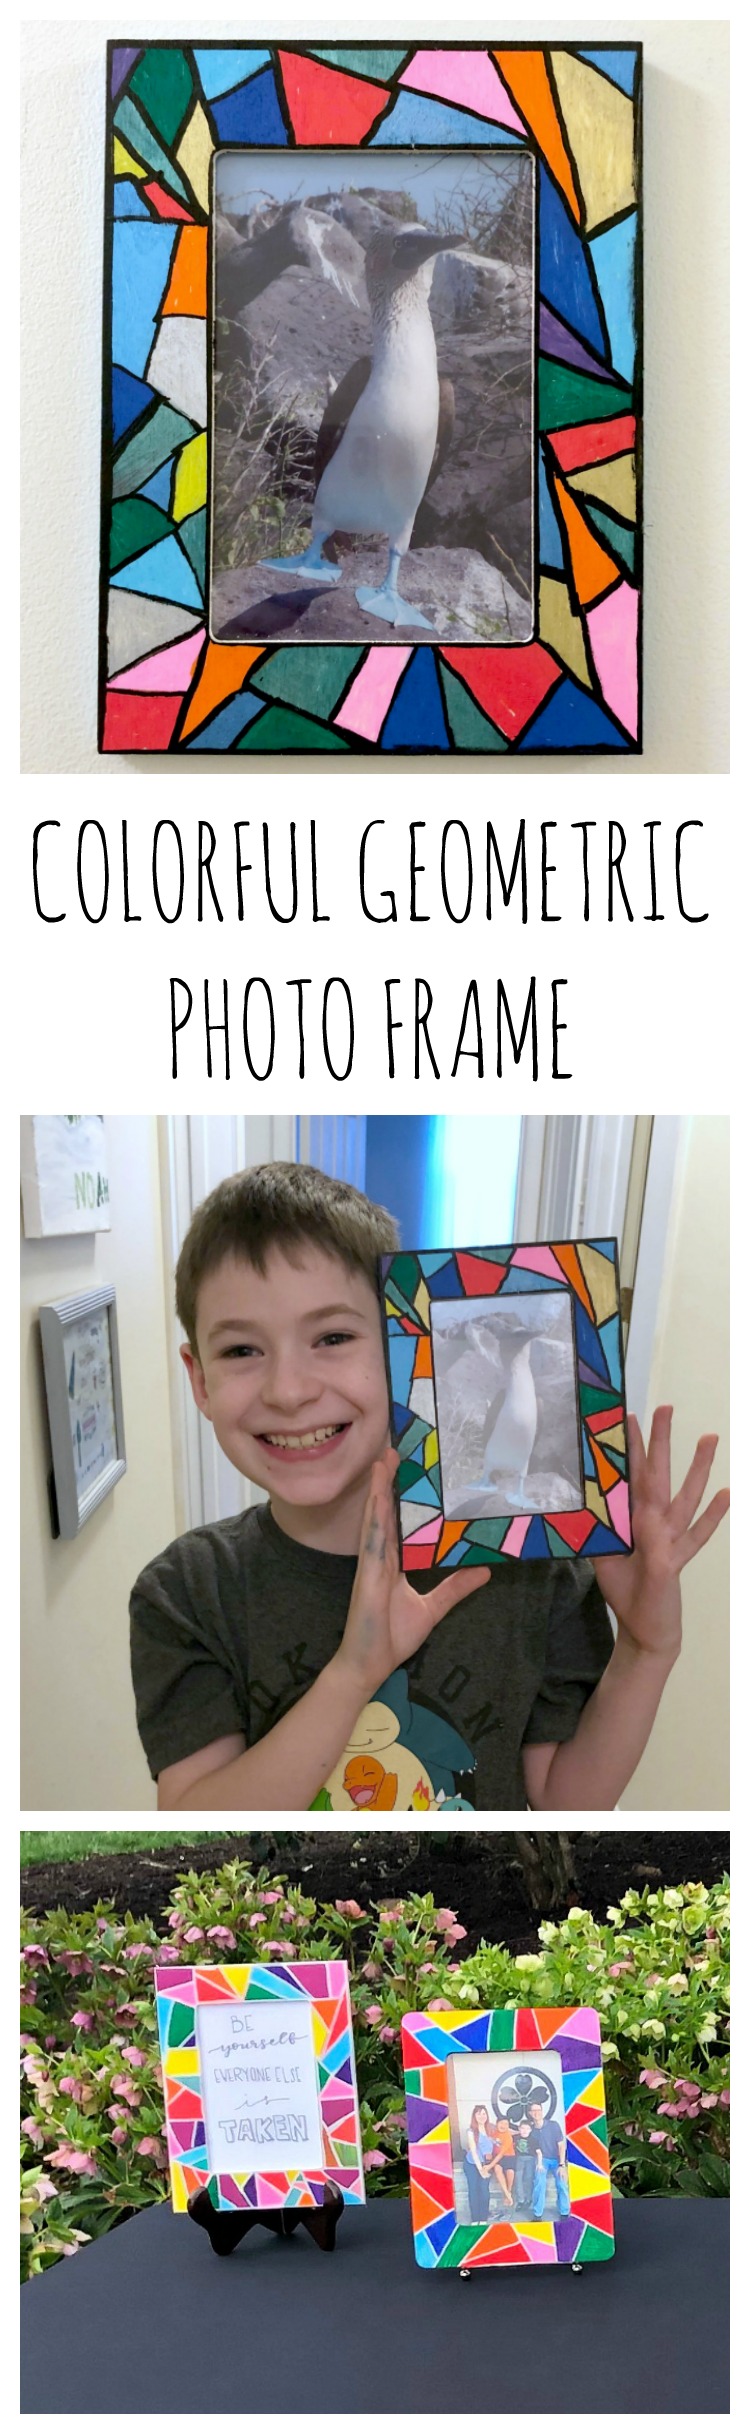 Colorful Geometric Photo Frame